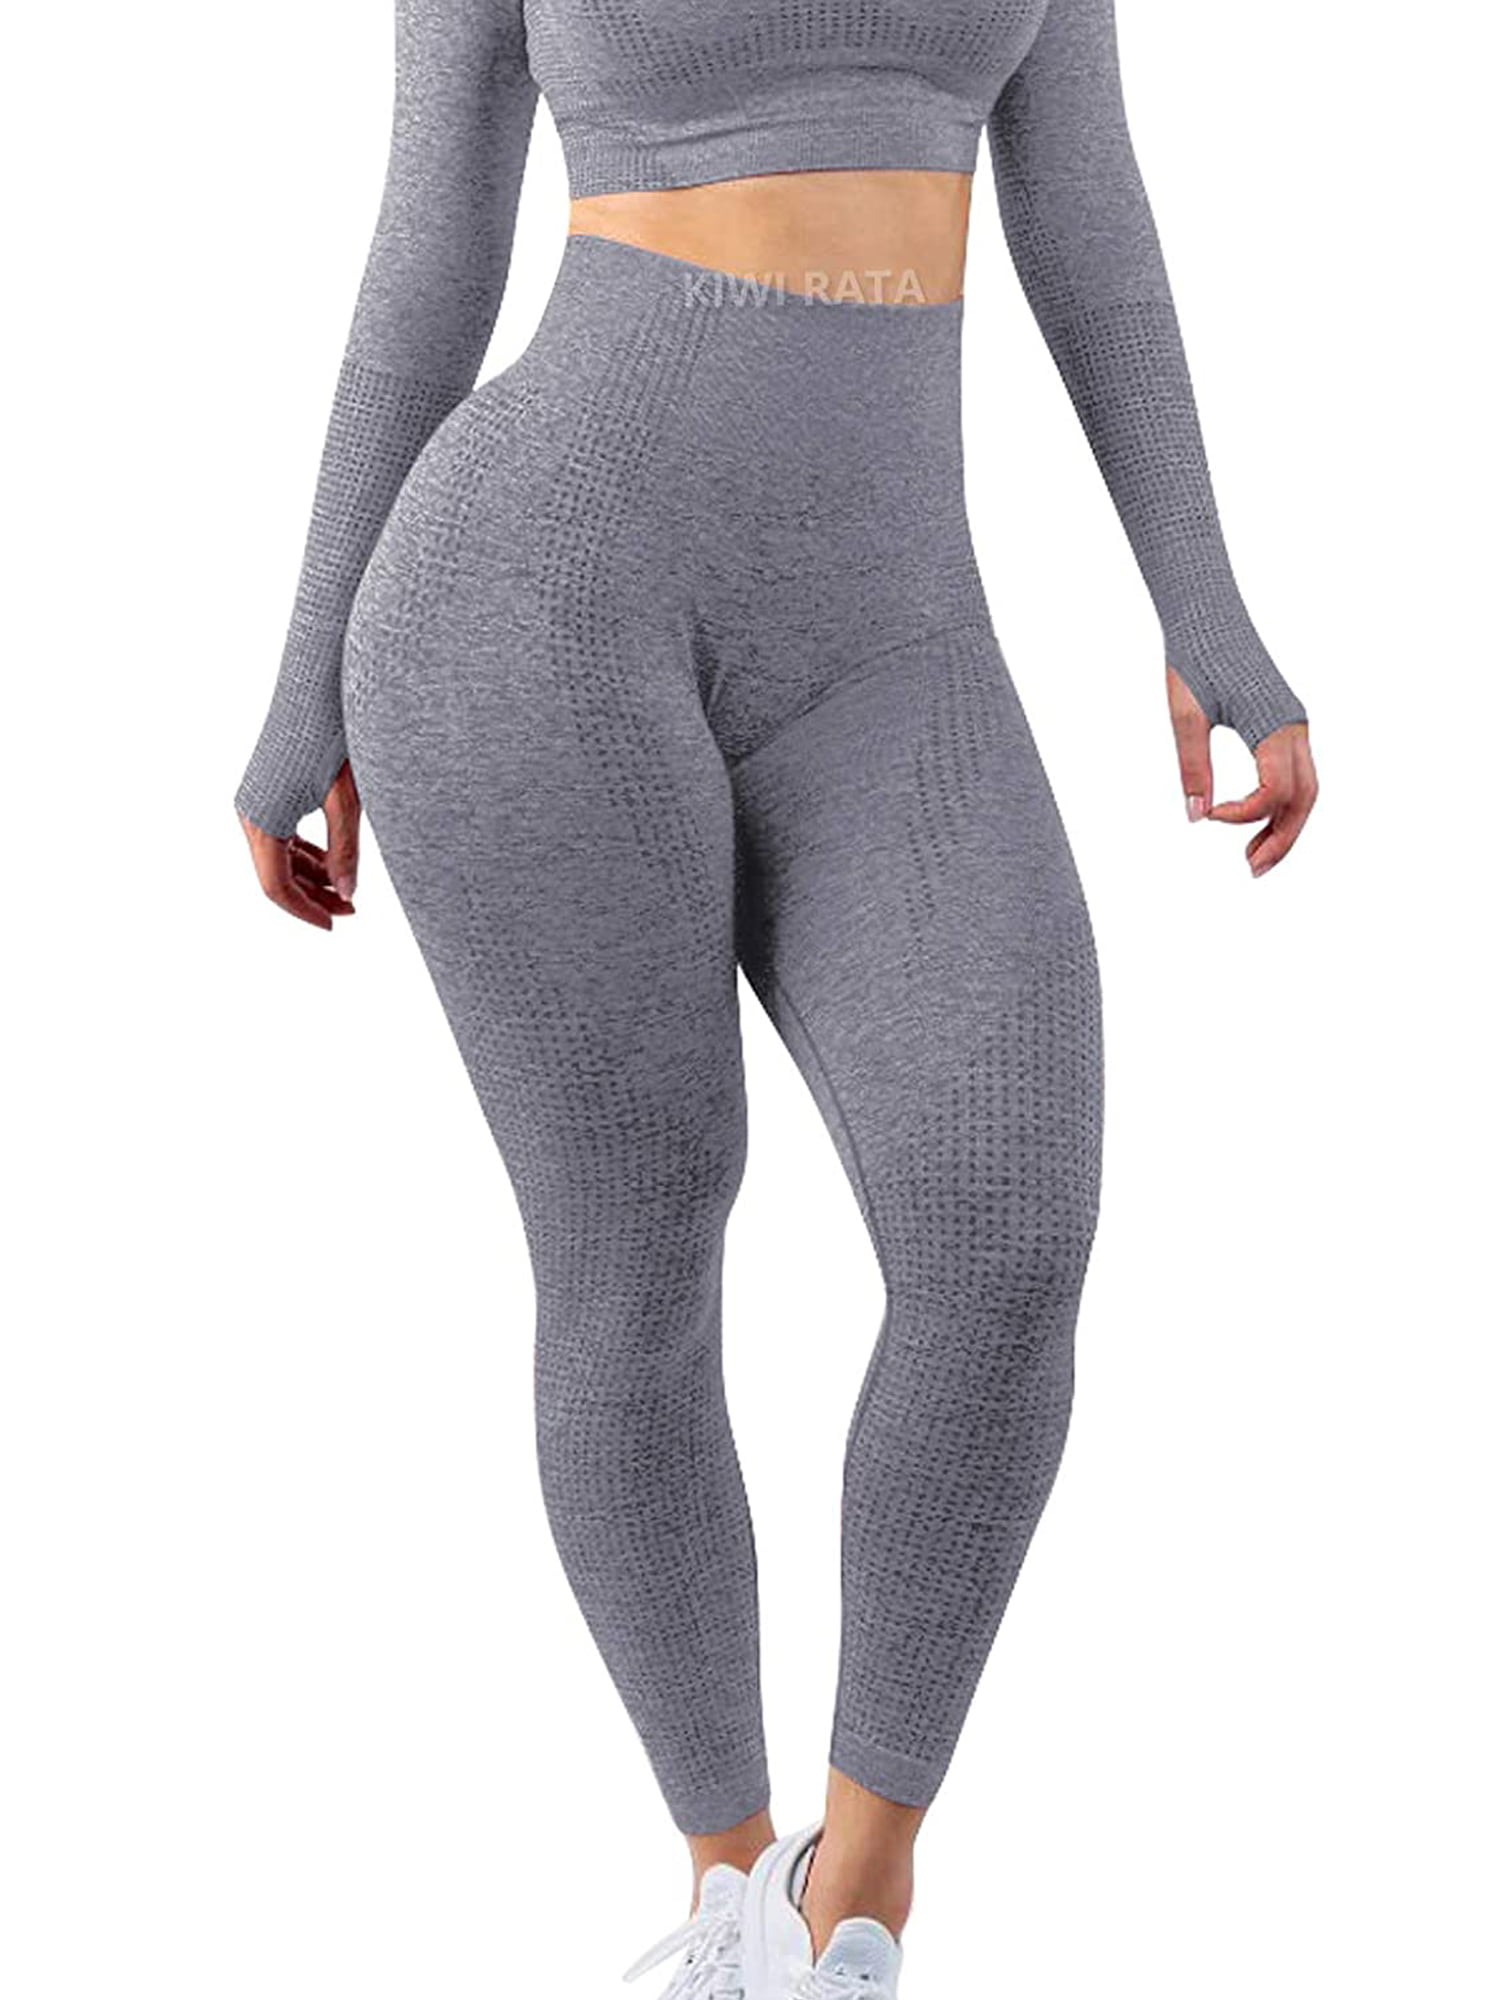 KIWI RATA Women Seamless High Waist Leggings Compression Tummy Control Butt Lift Yoga Pants Squat Proof Active Workout Tights 